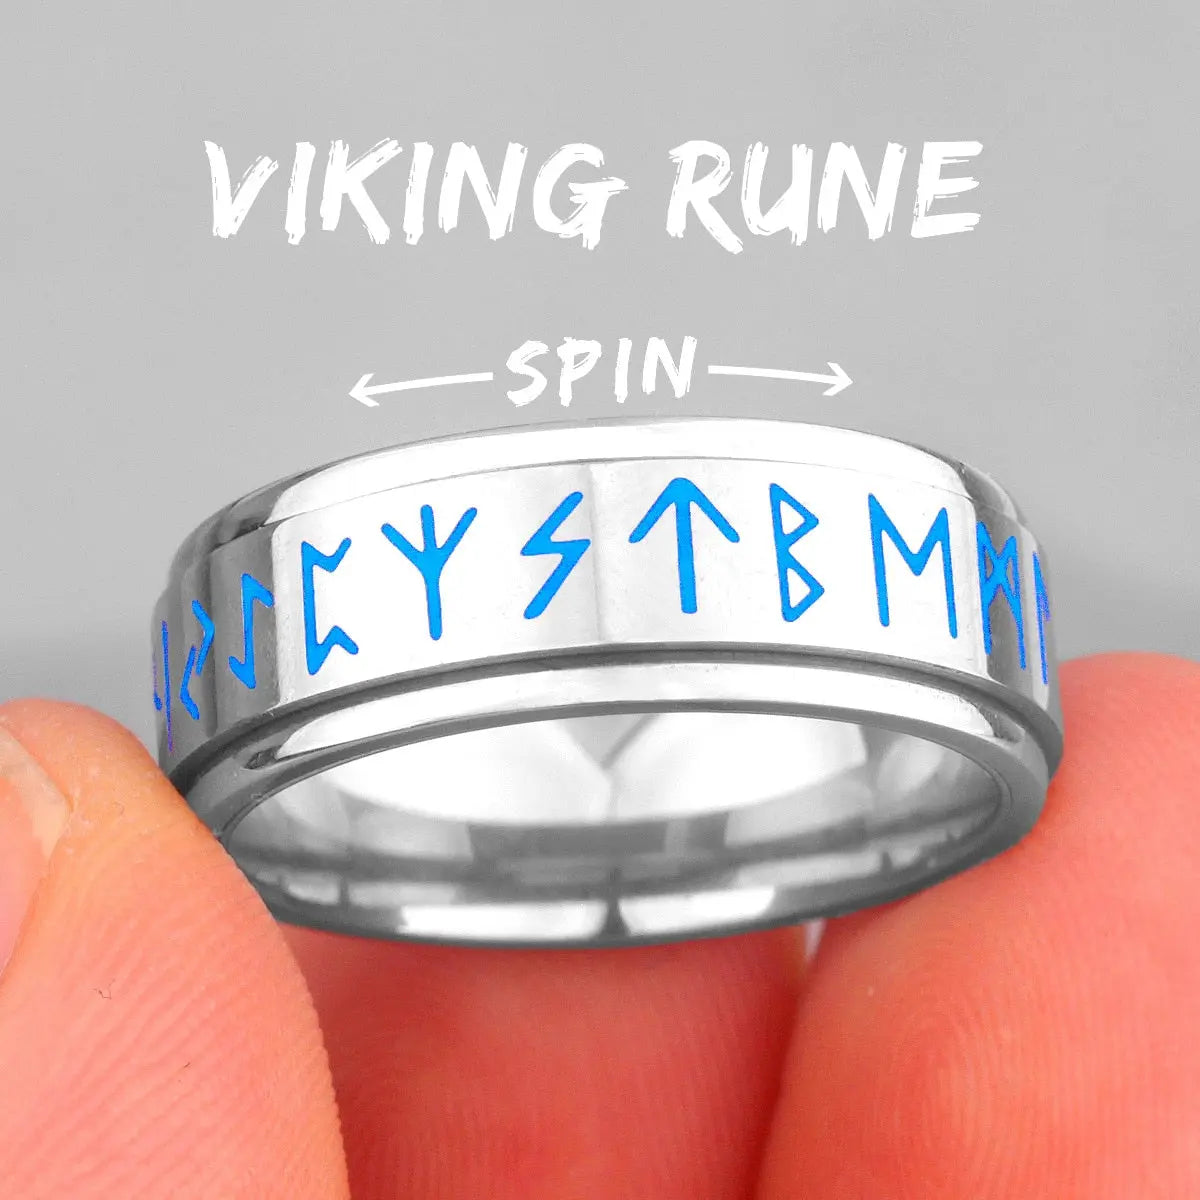 Viking Runic Ring - Mens Spin Rings Glow In the Dark Rings for Men